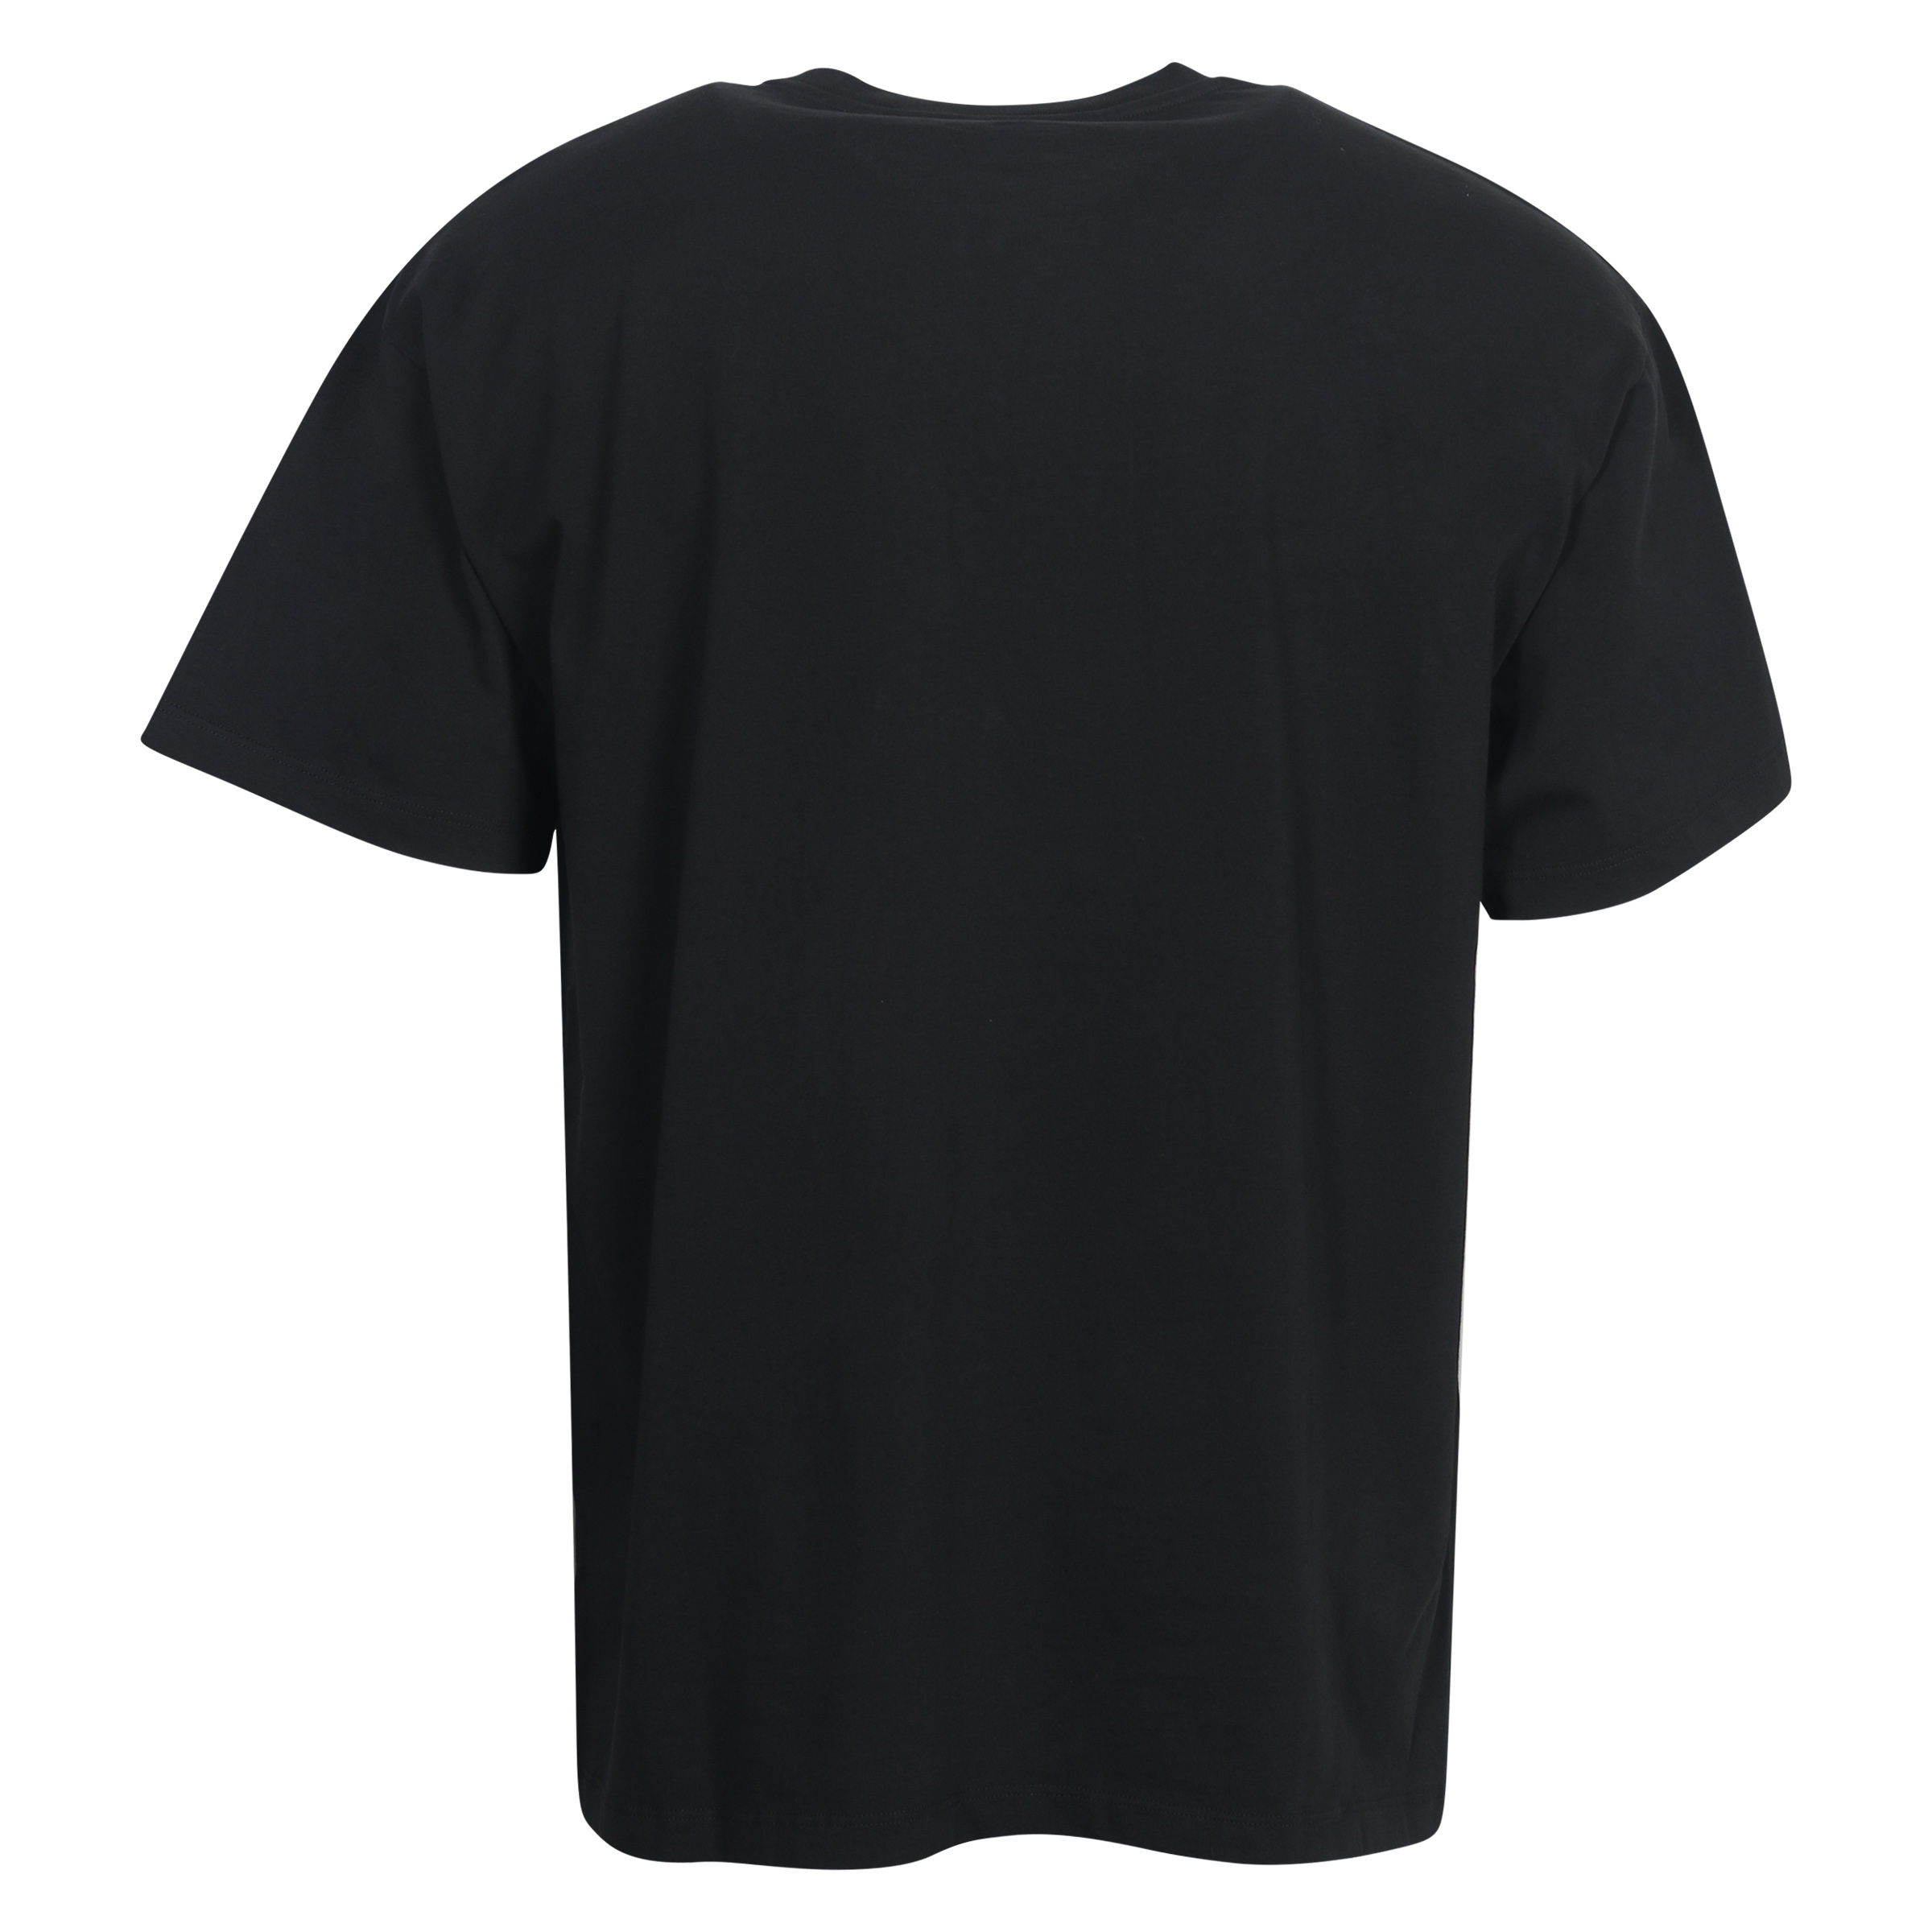 Unisex Aries Temple T-Shirt in Black